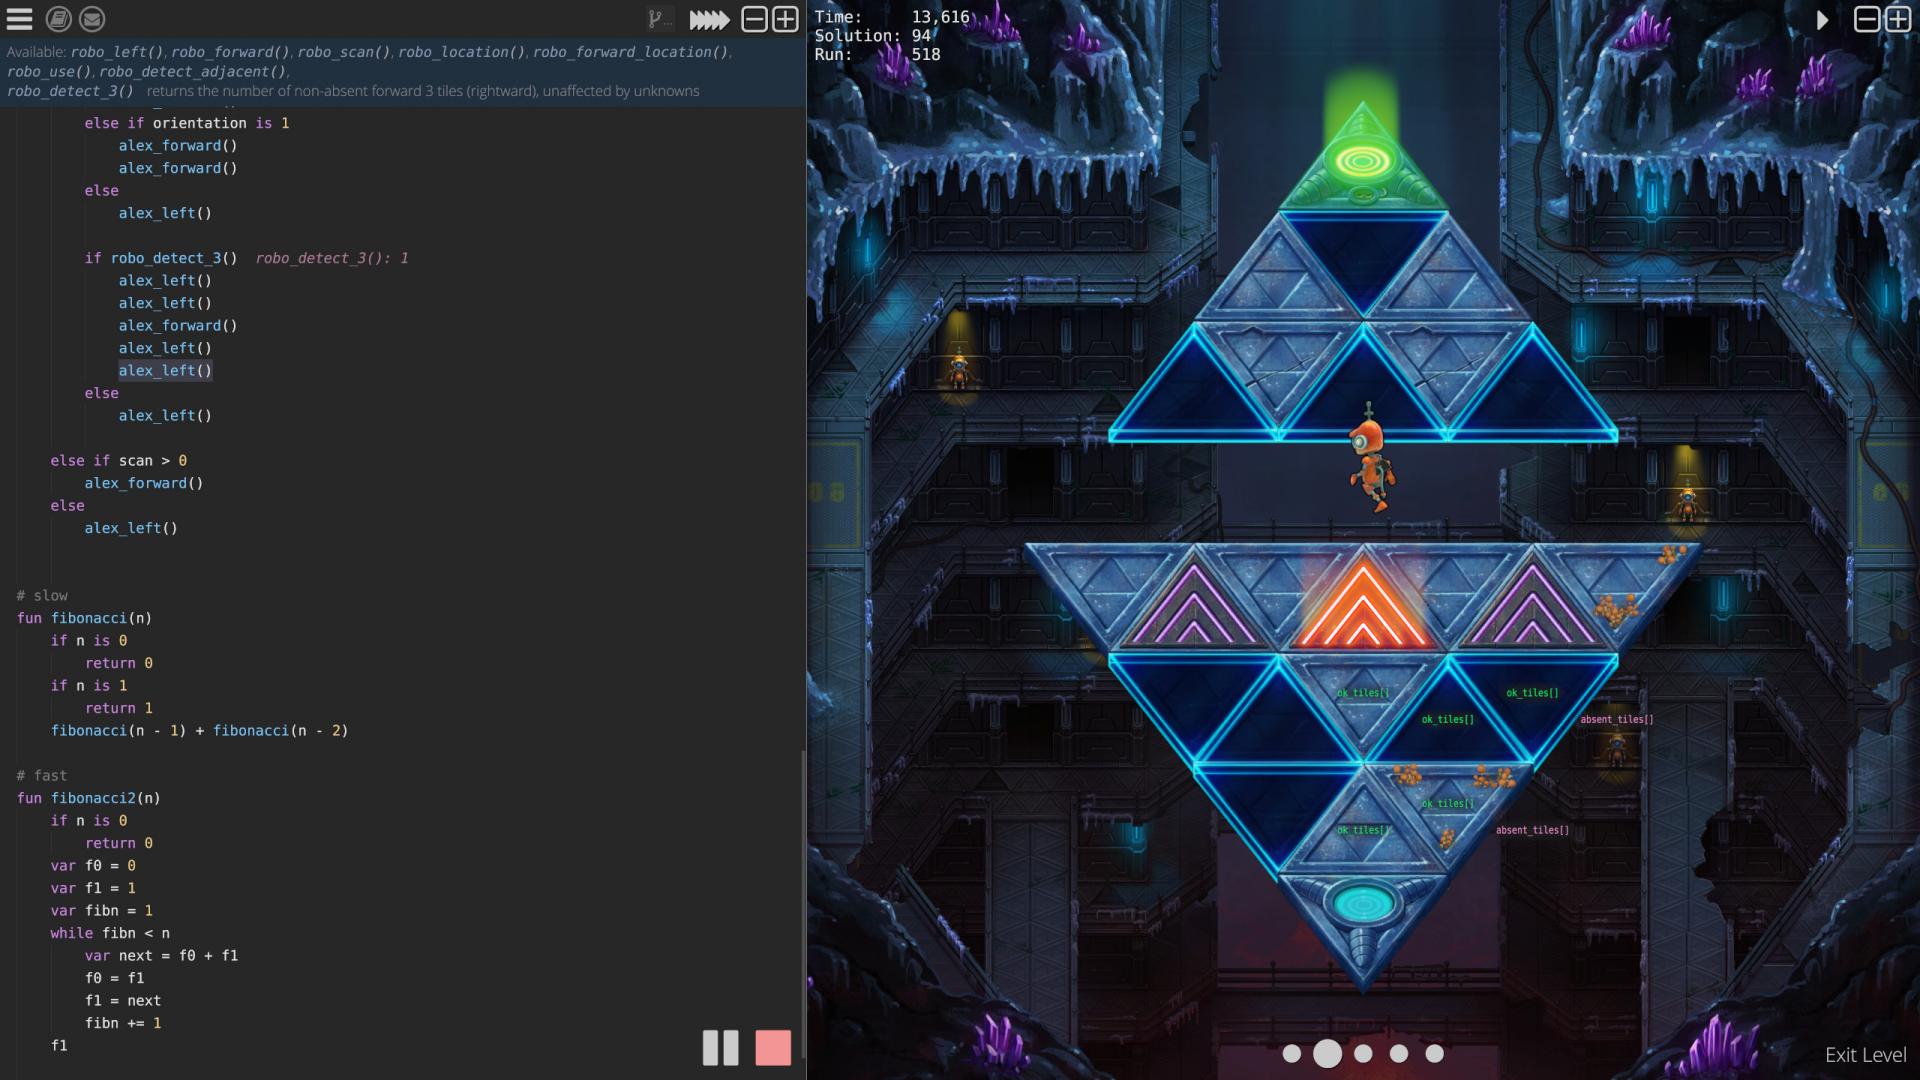 Robo Instructus gameplay screenshot with full UI